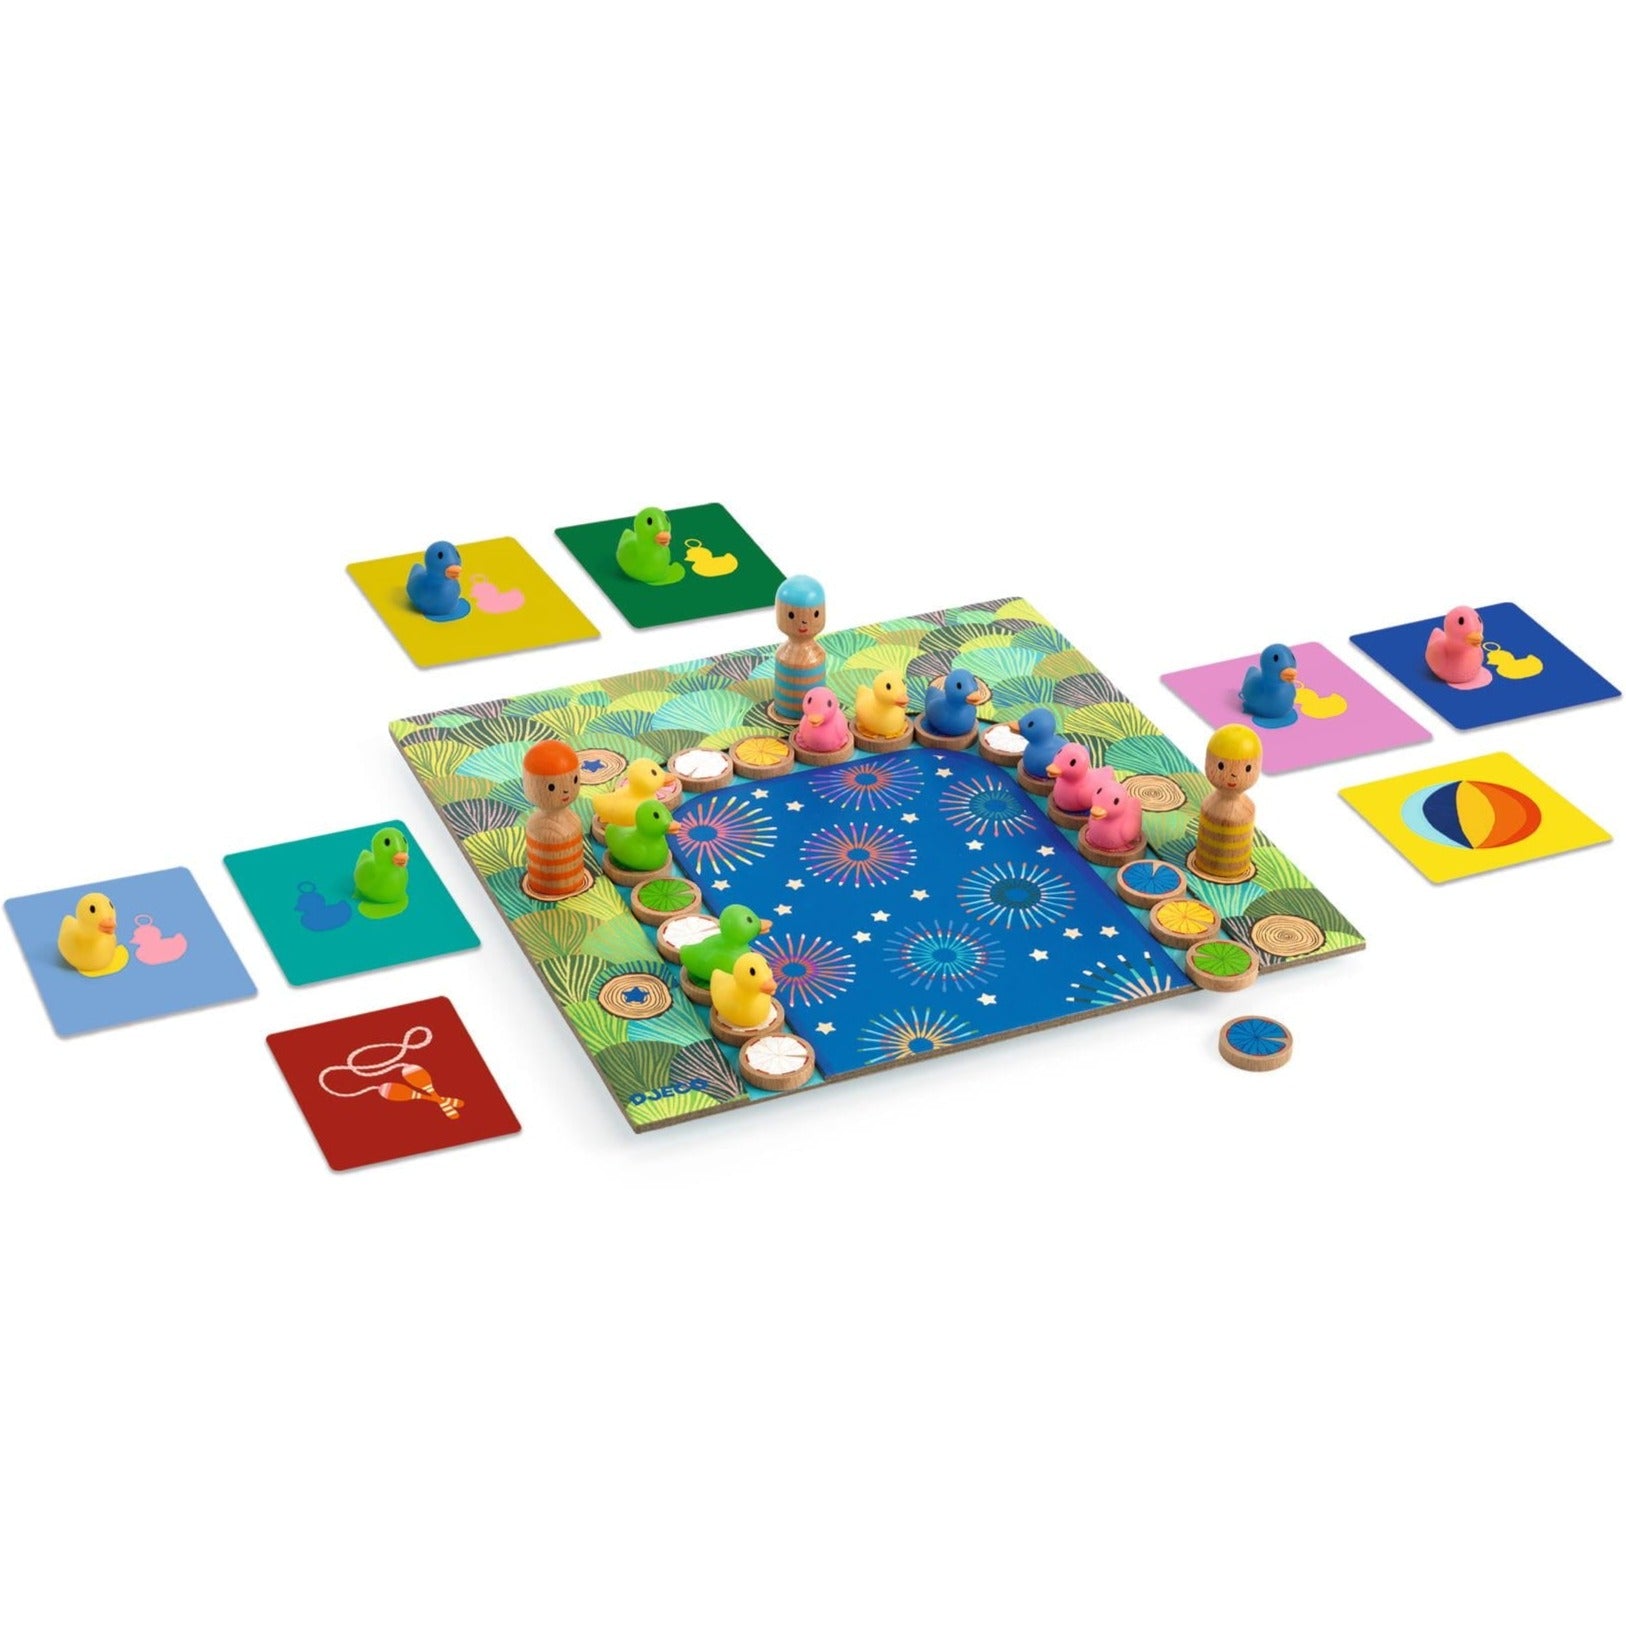 Djeco: Ducky & Ducky board game